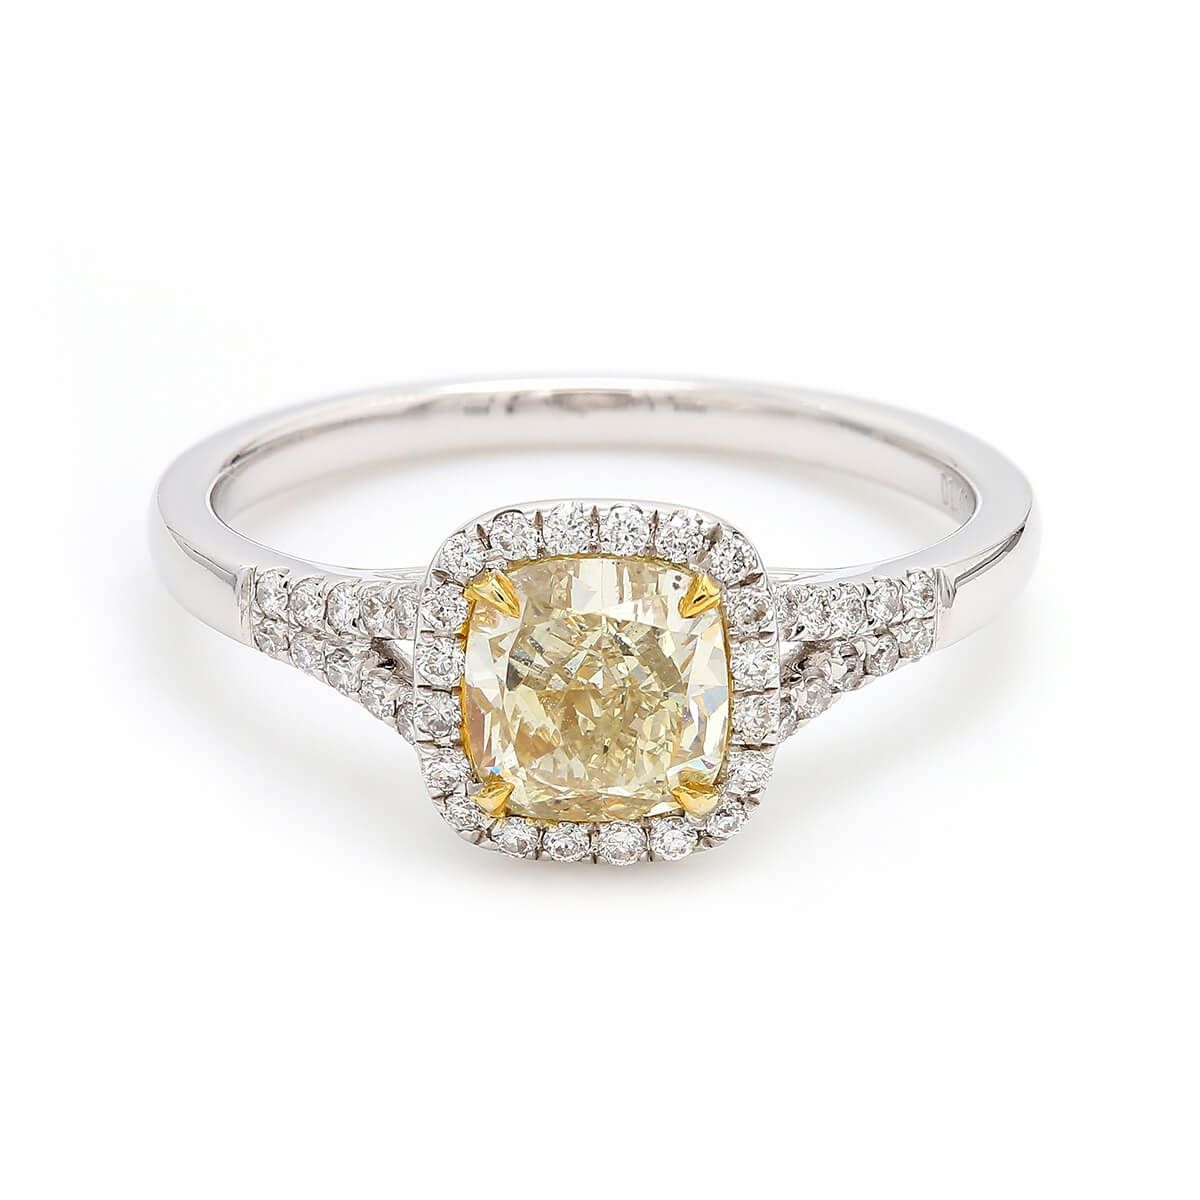 Light Yellow (W-X) Diamond Ring, 1.17 Ct. TW, Cushion shape